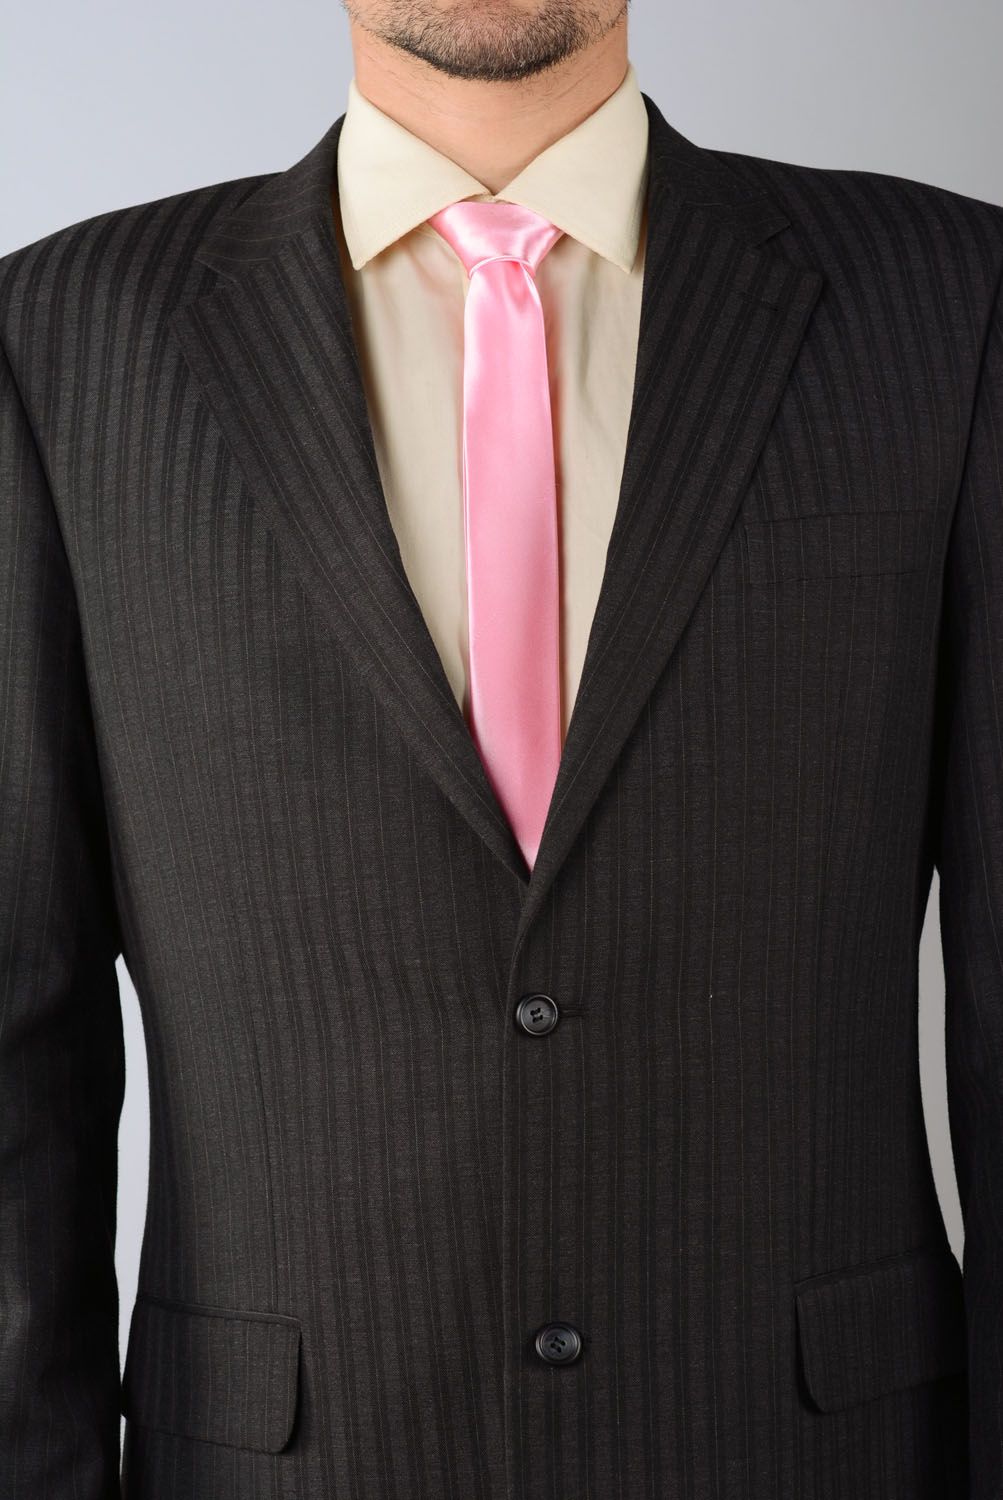 Cravate du satin rose faite main photo 4